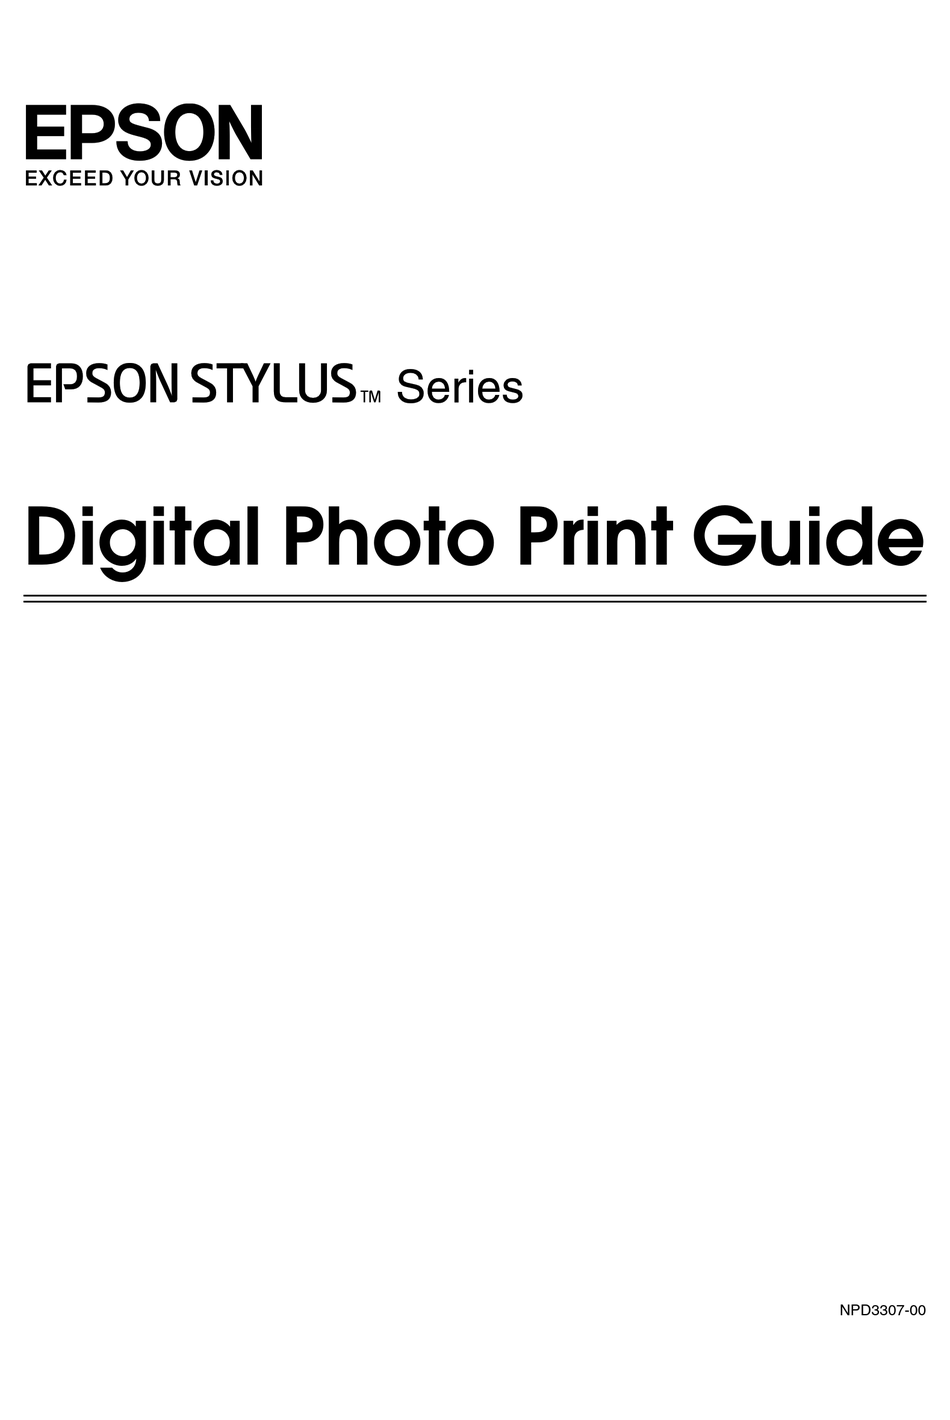 Epson Stylus Series Manual Pdf Download Manualslib 0917